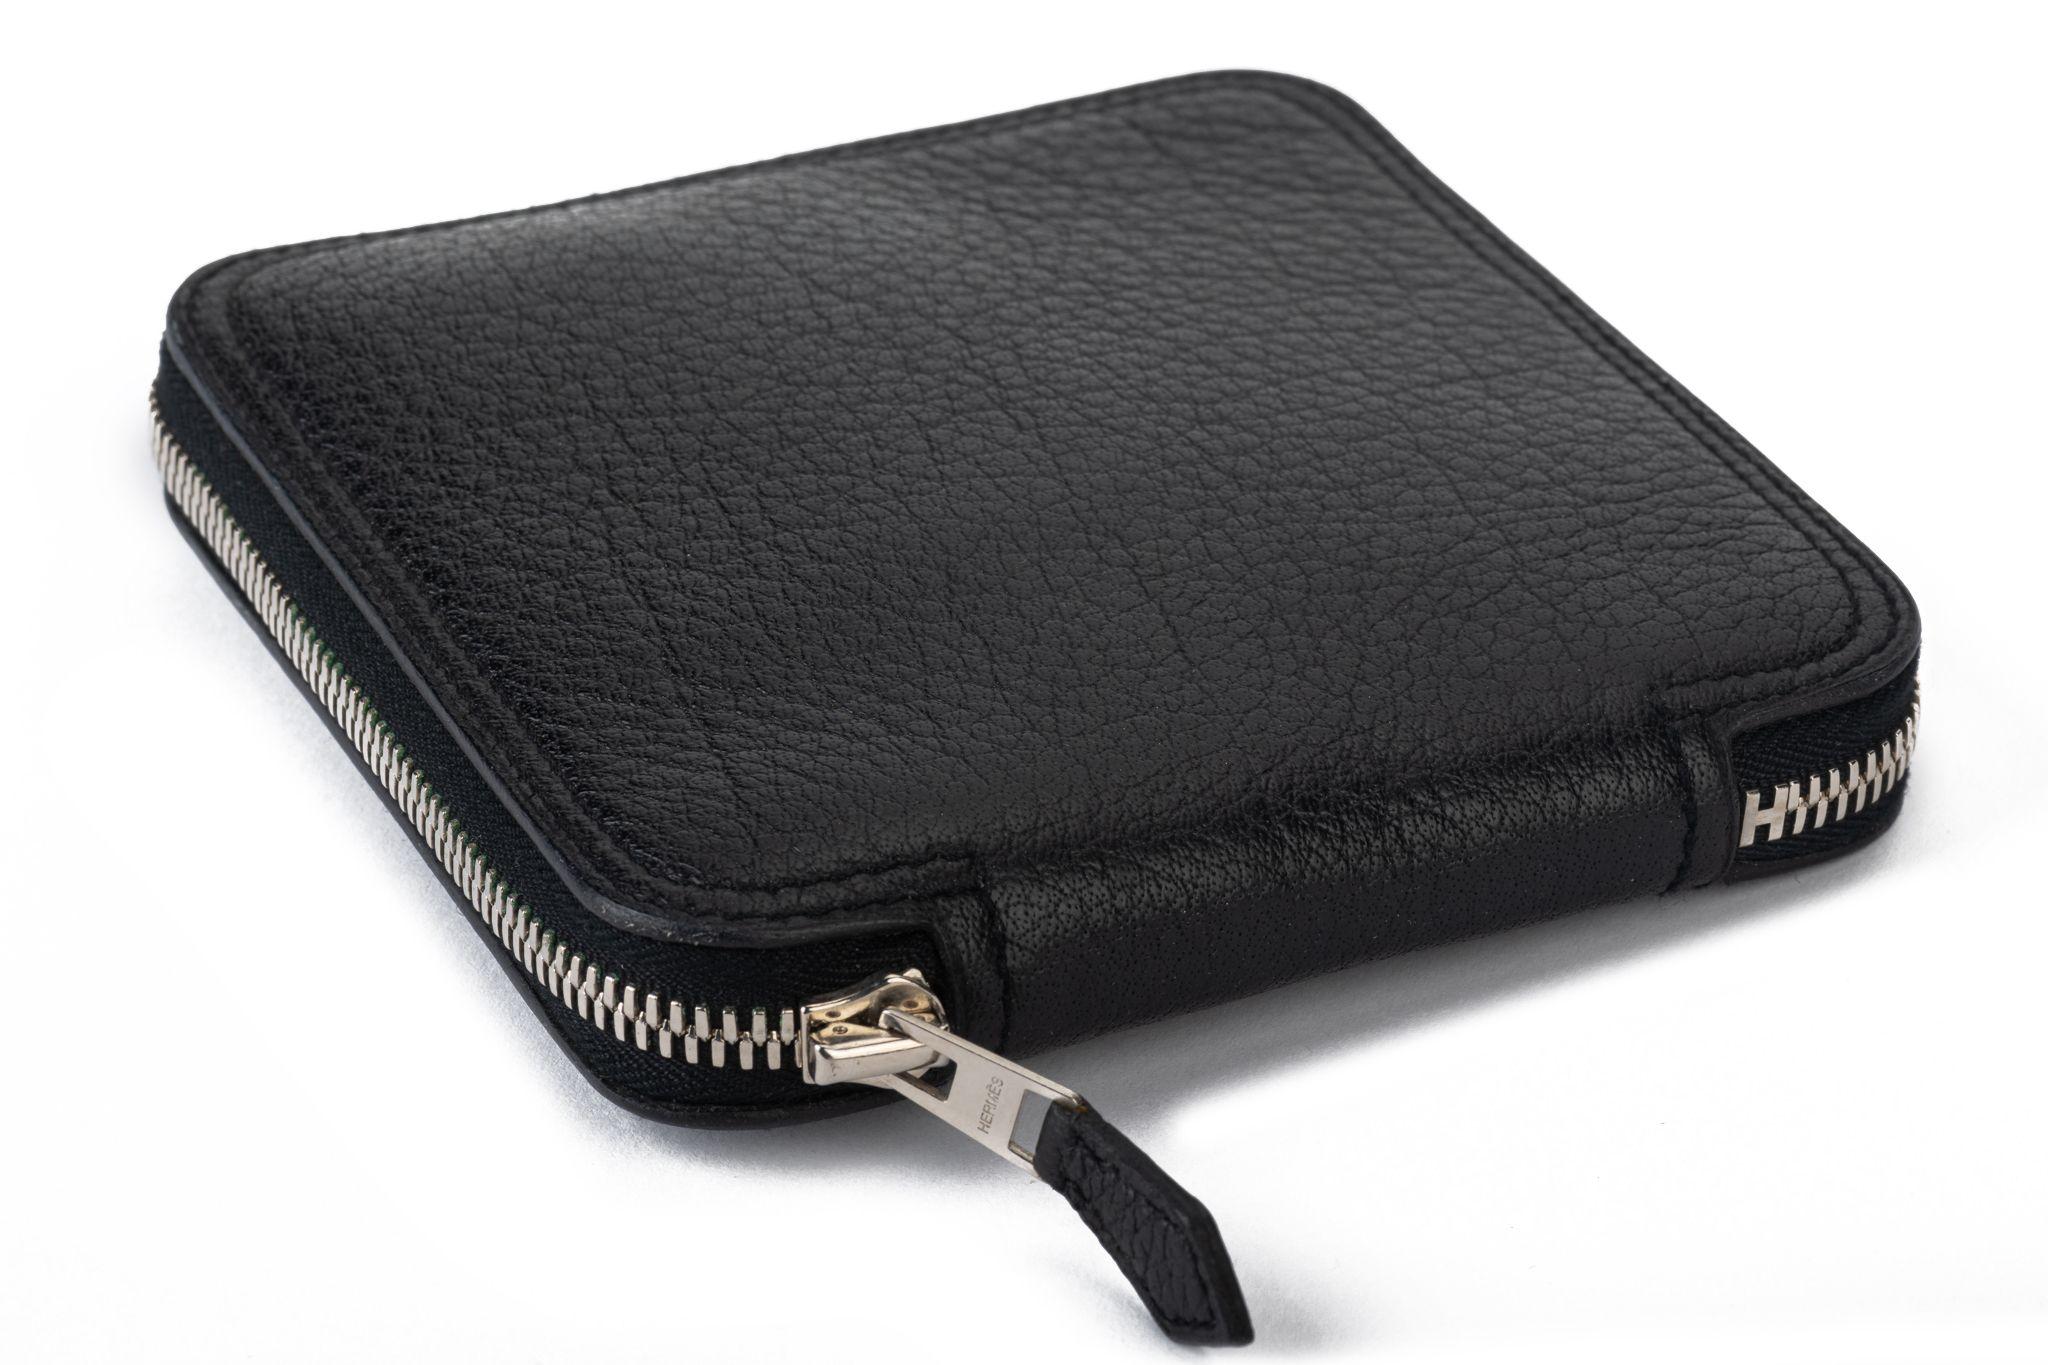 Hermès excellent condition black silky pop bag. Bag closed 5”x5”x1”. Comes with original dust cover.